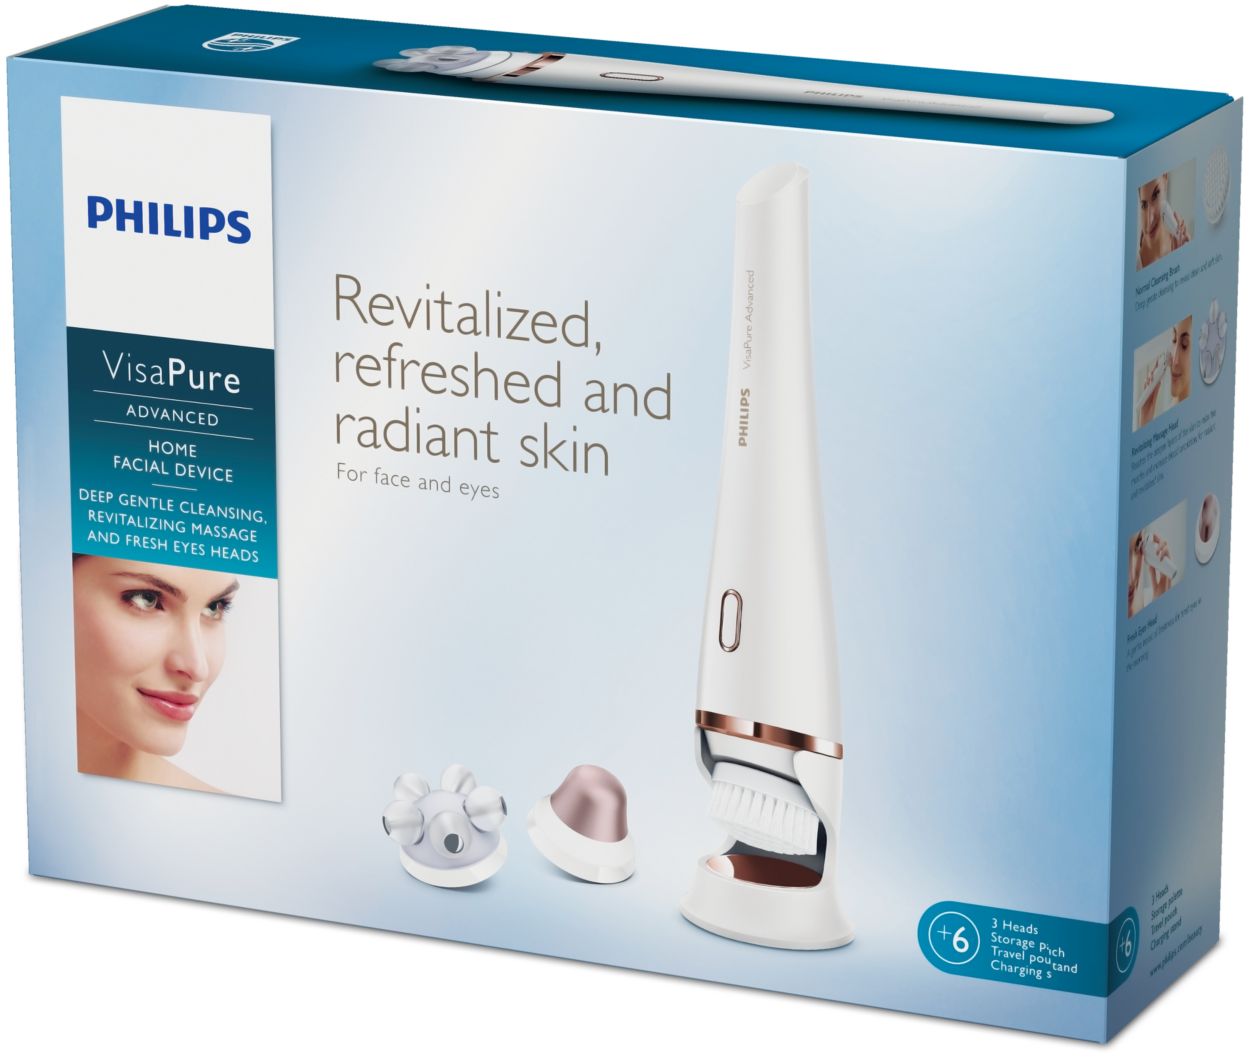 VisaPure Advanced Gezichtsverzorgingsapparaat thuis SC5370/10 | Philips